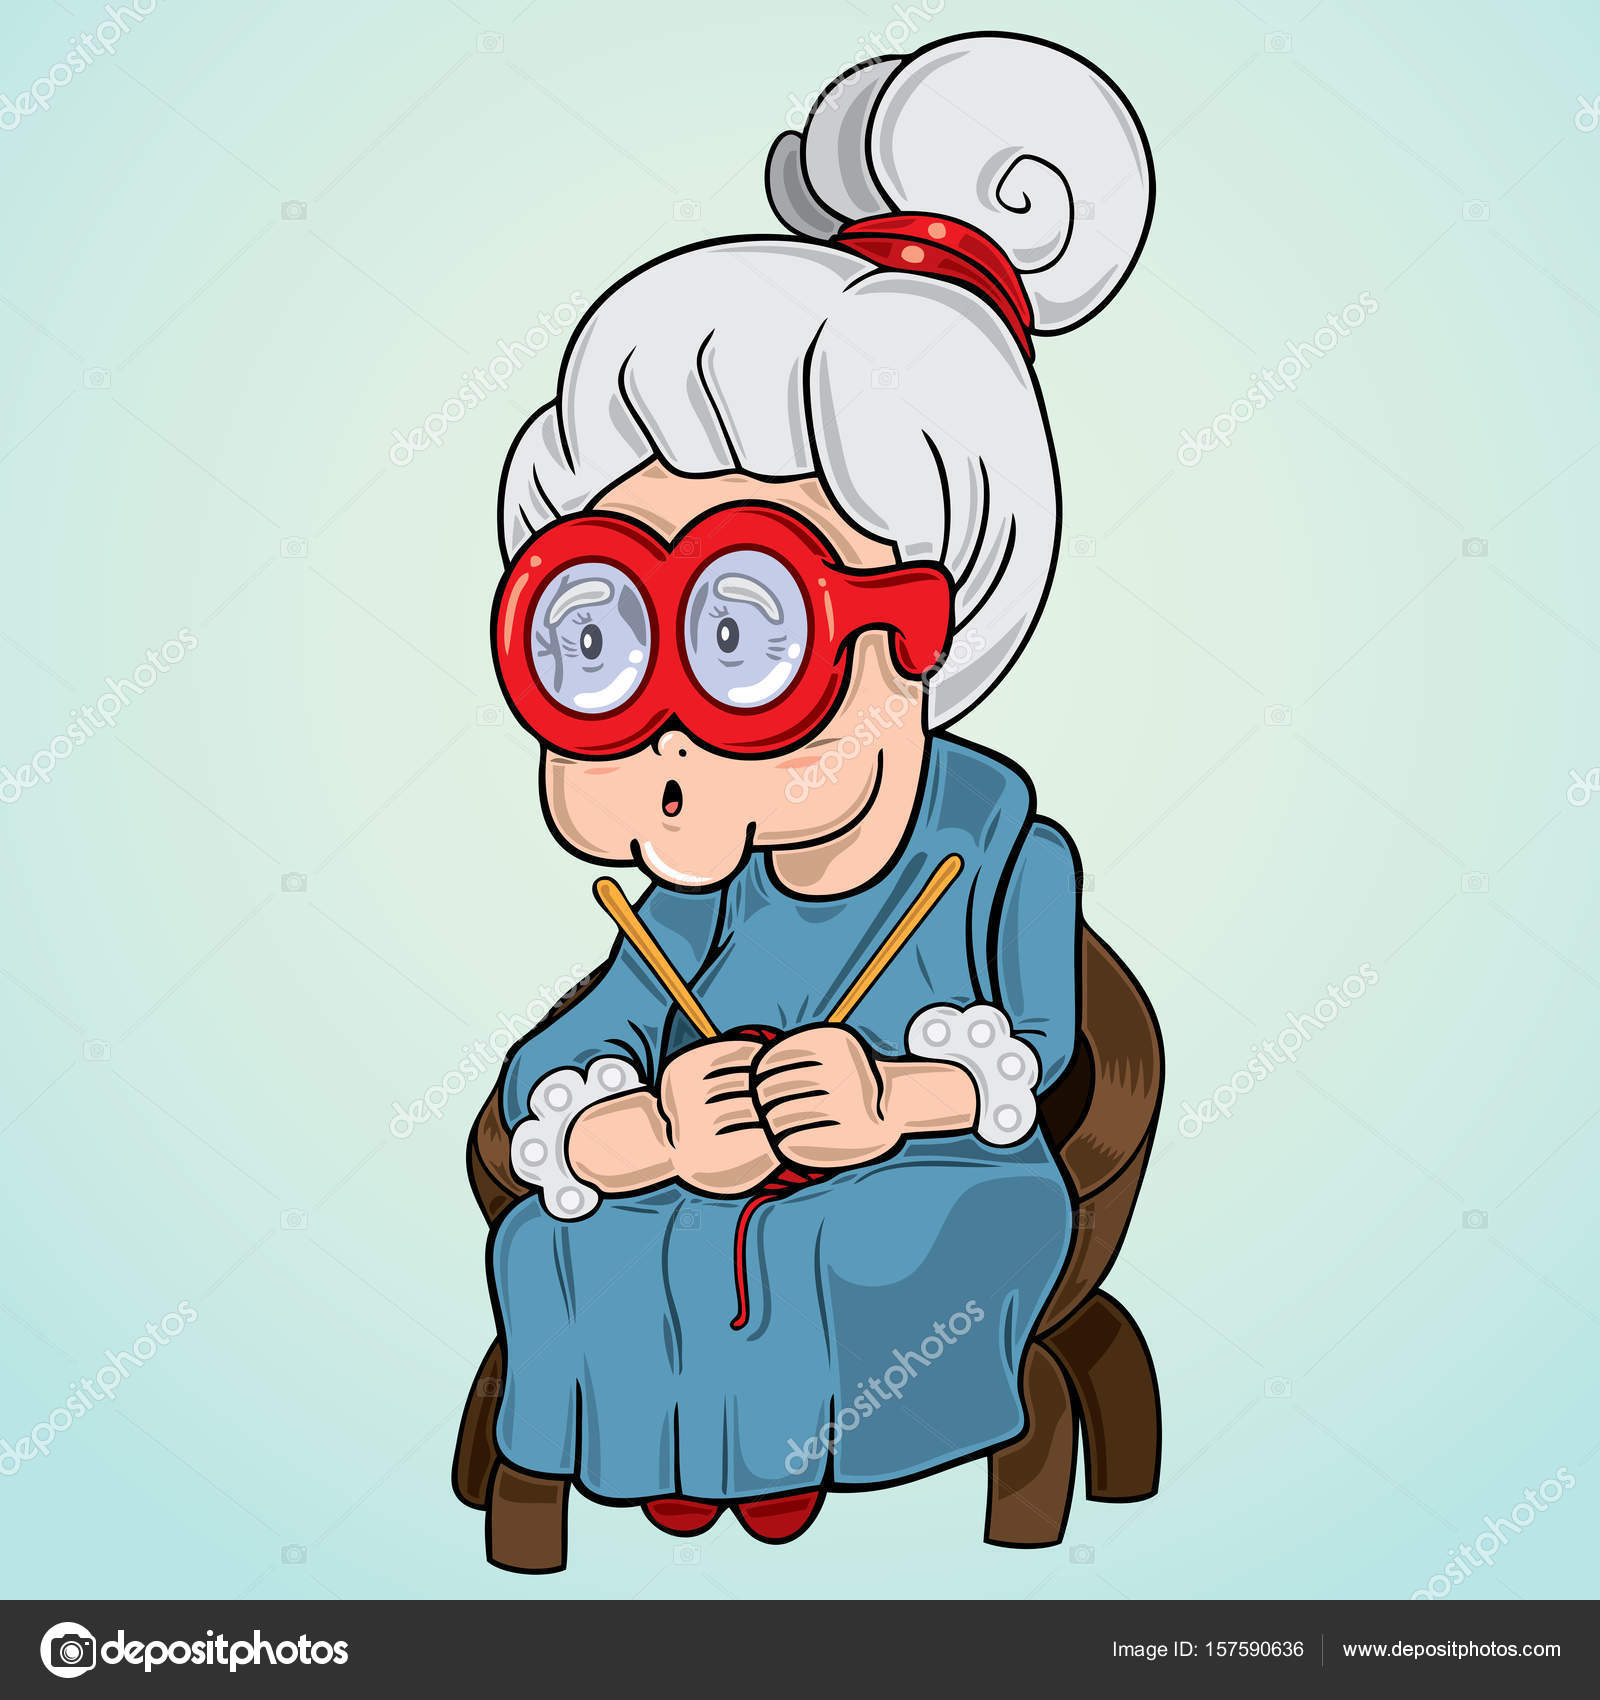 Grandma Wearing Glasses